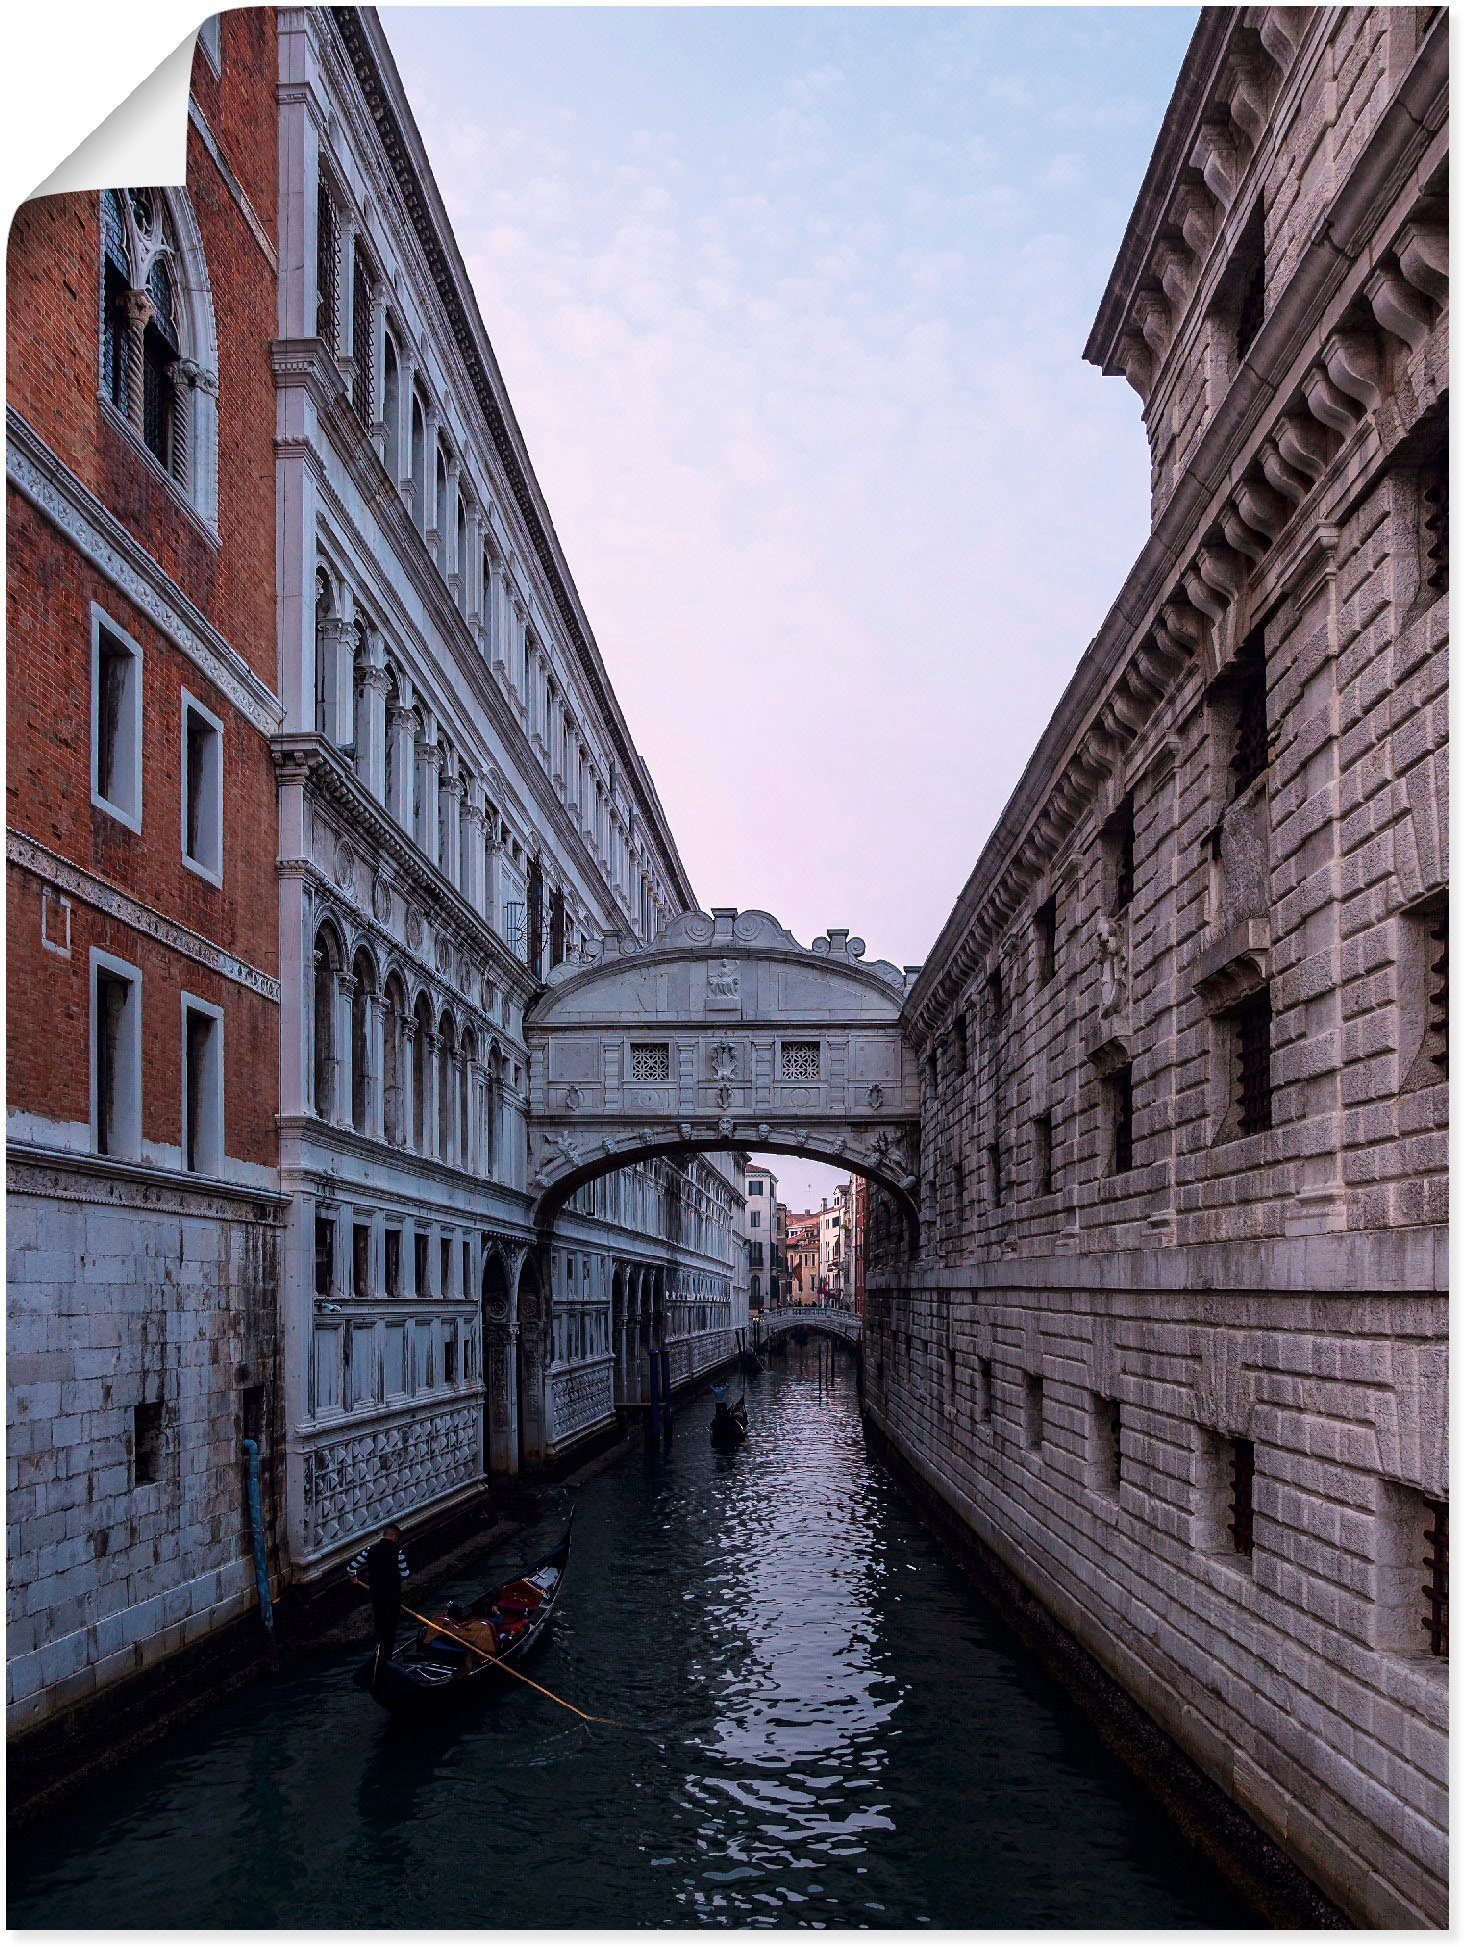 Alubild, Poster versch. Blick die in (1 Wandbild auf Größen Venedig, als oder Wandaufkleber Seufzerbrücke in Artland St), Brücken Leinwandbild,